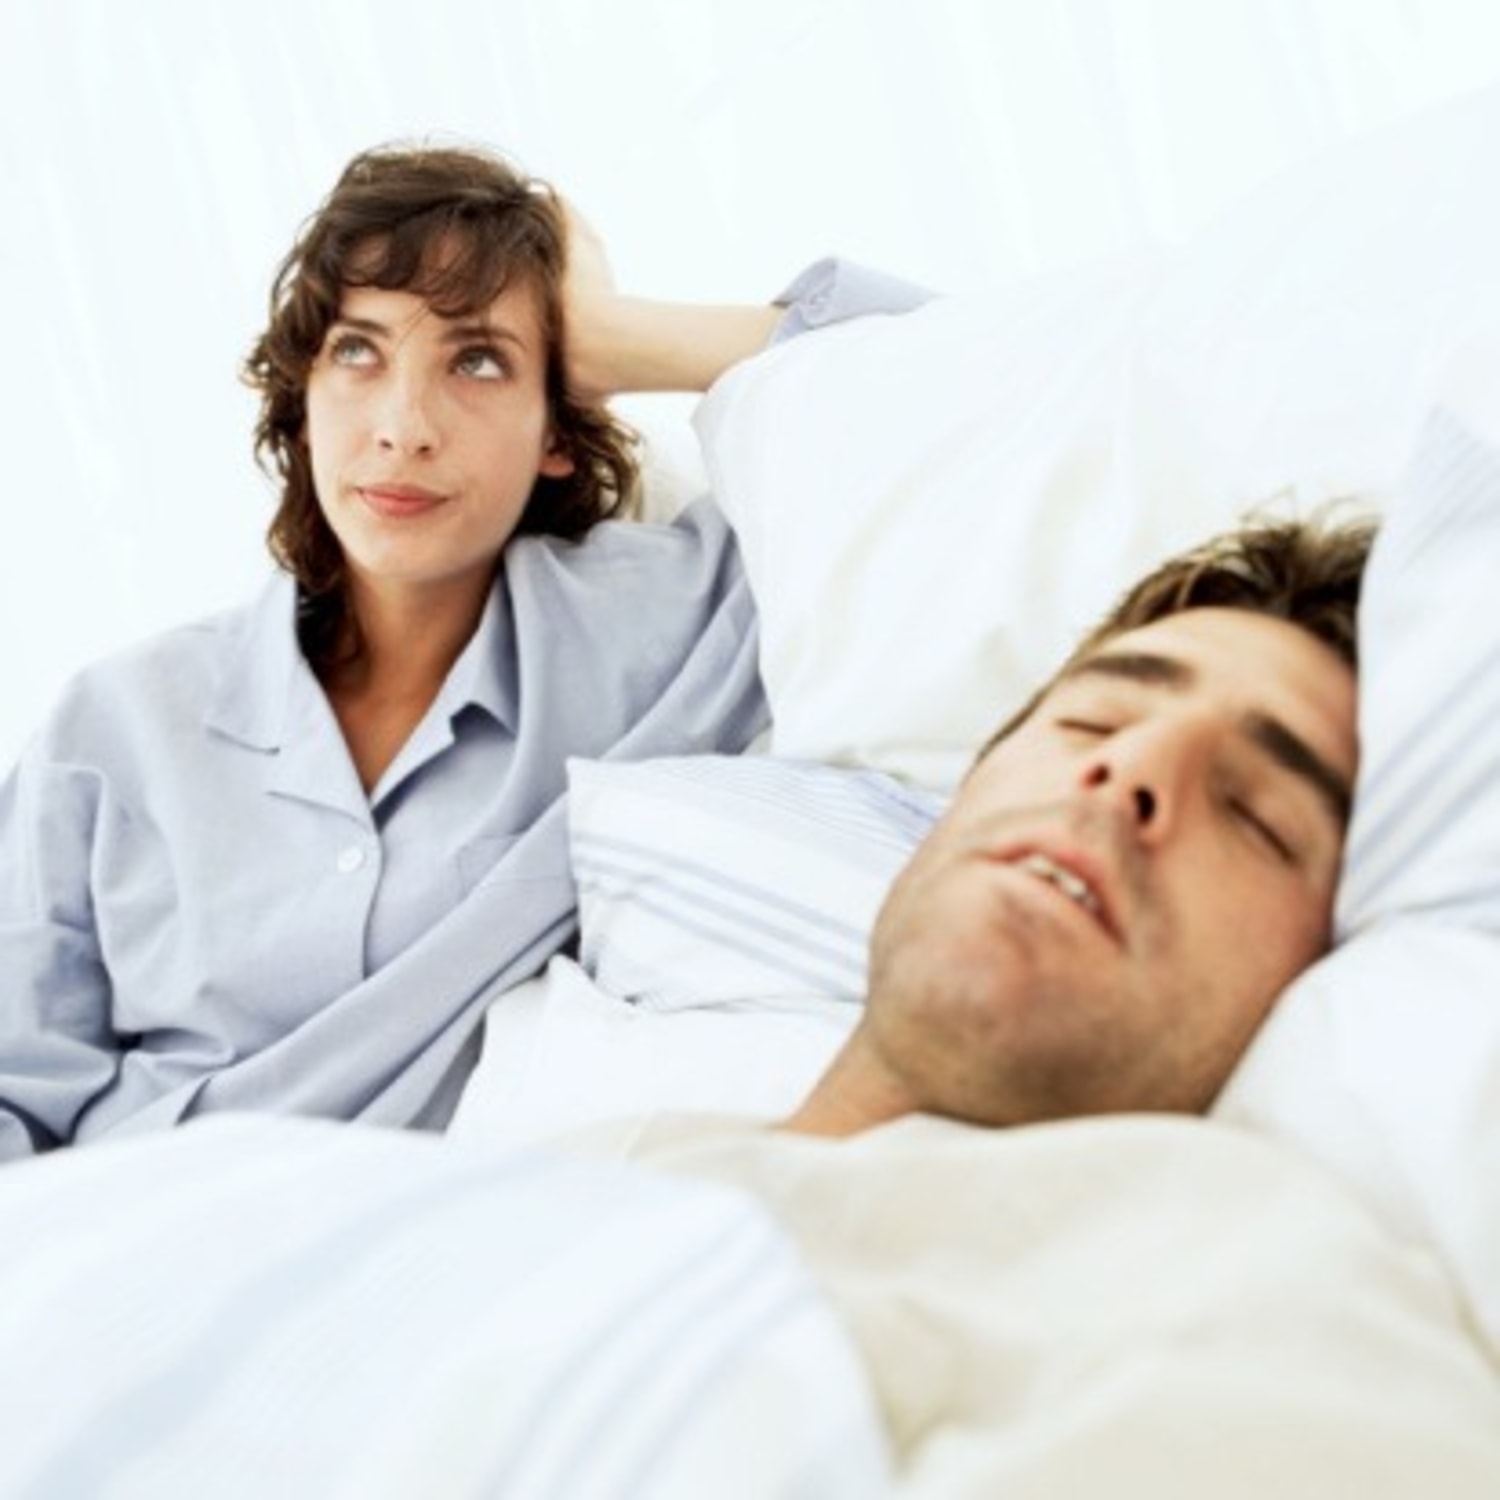 cum on sleeping wife